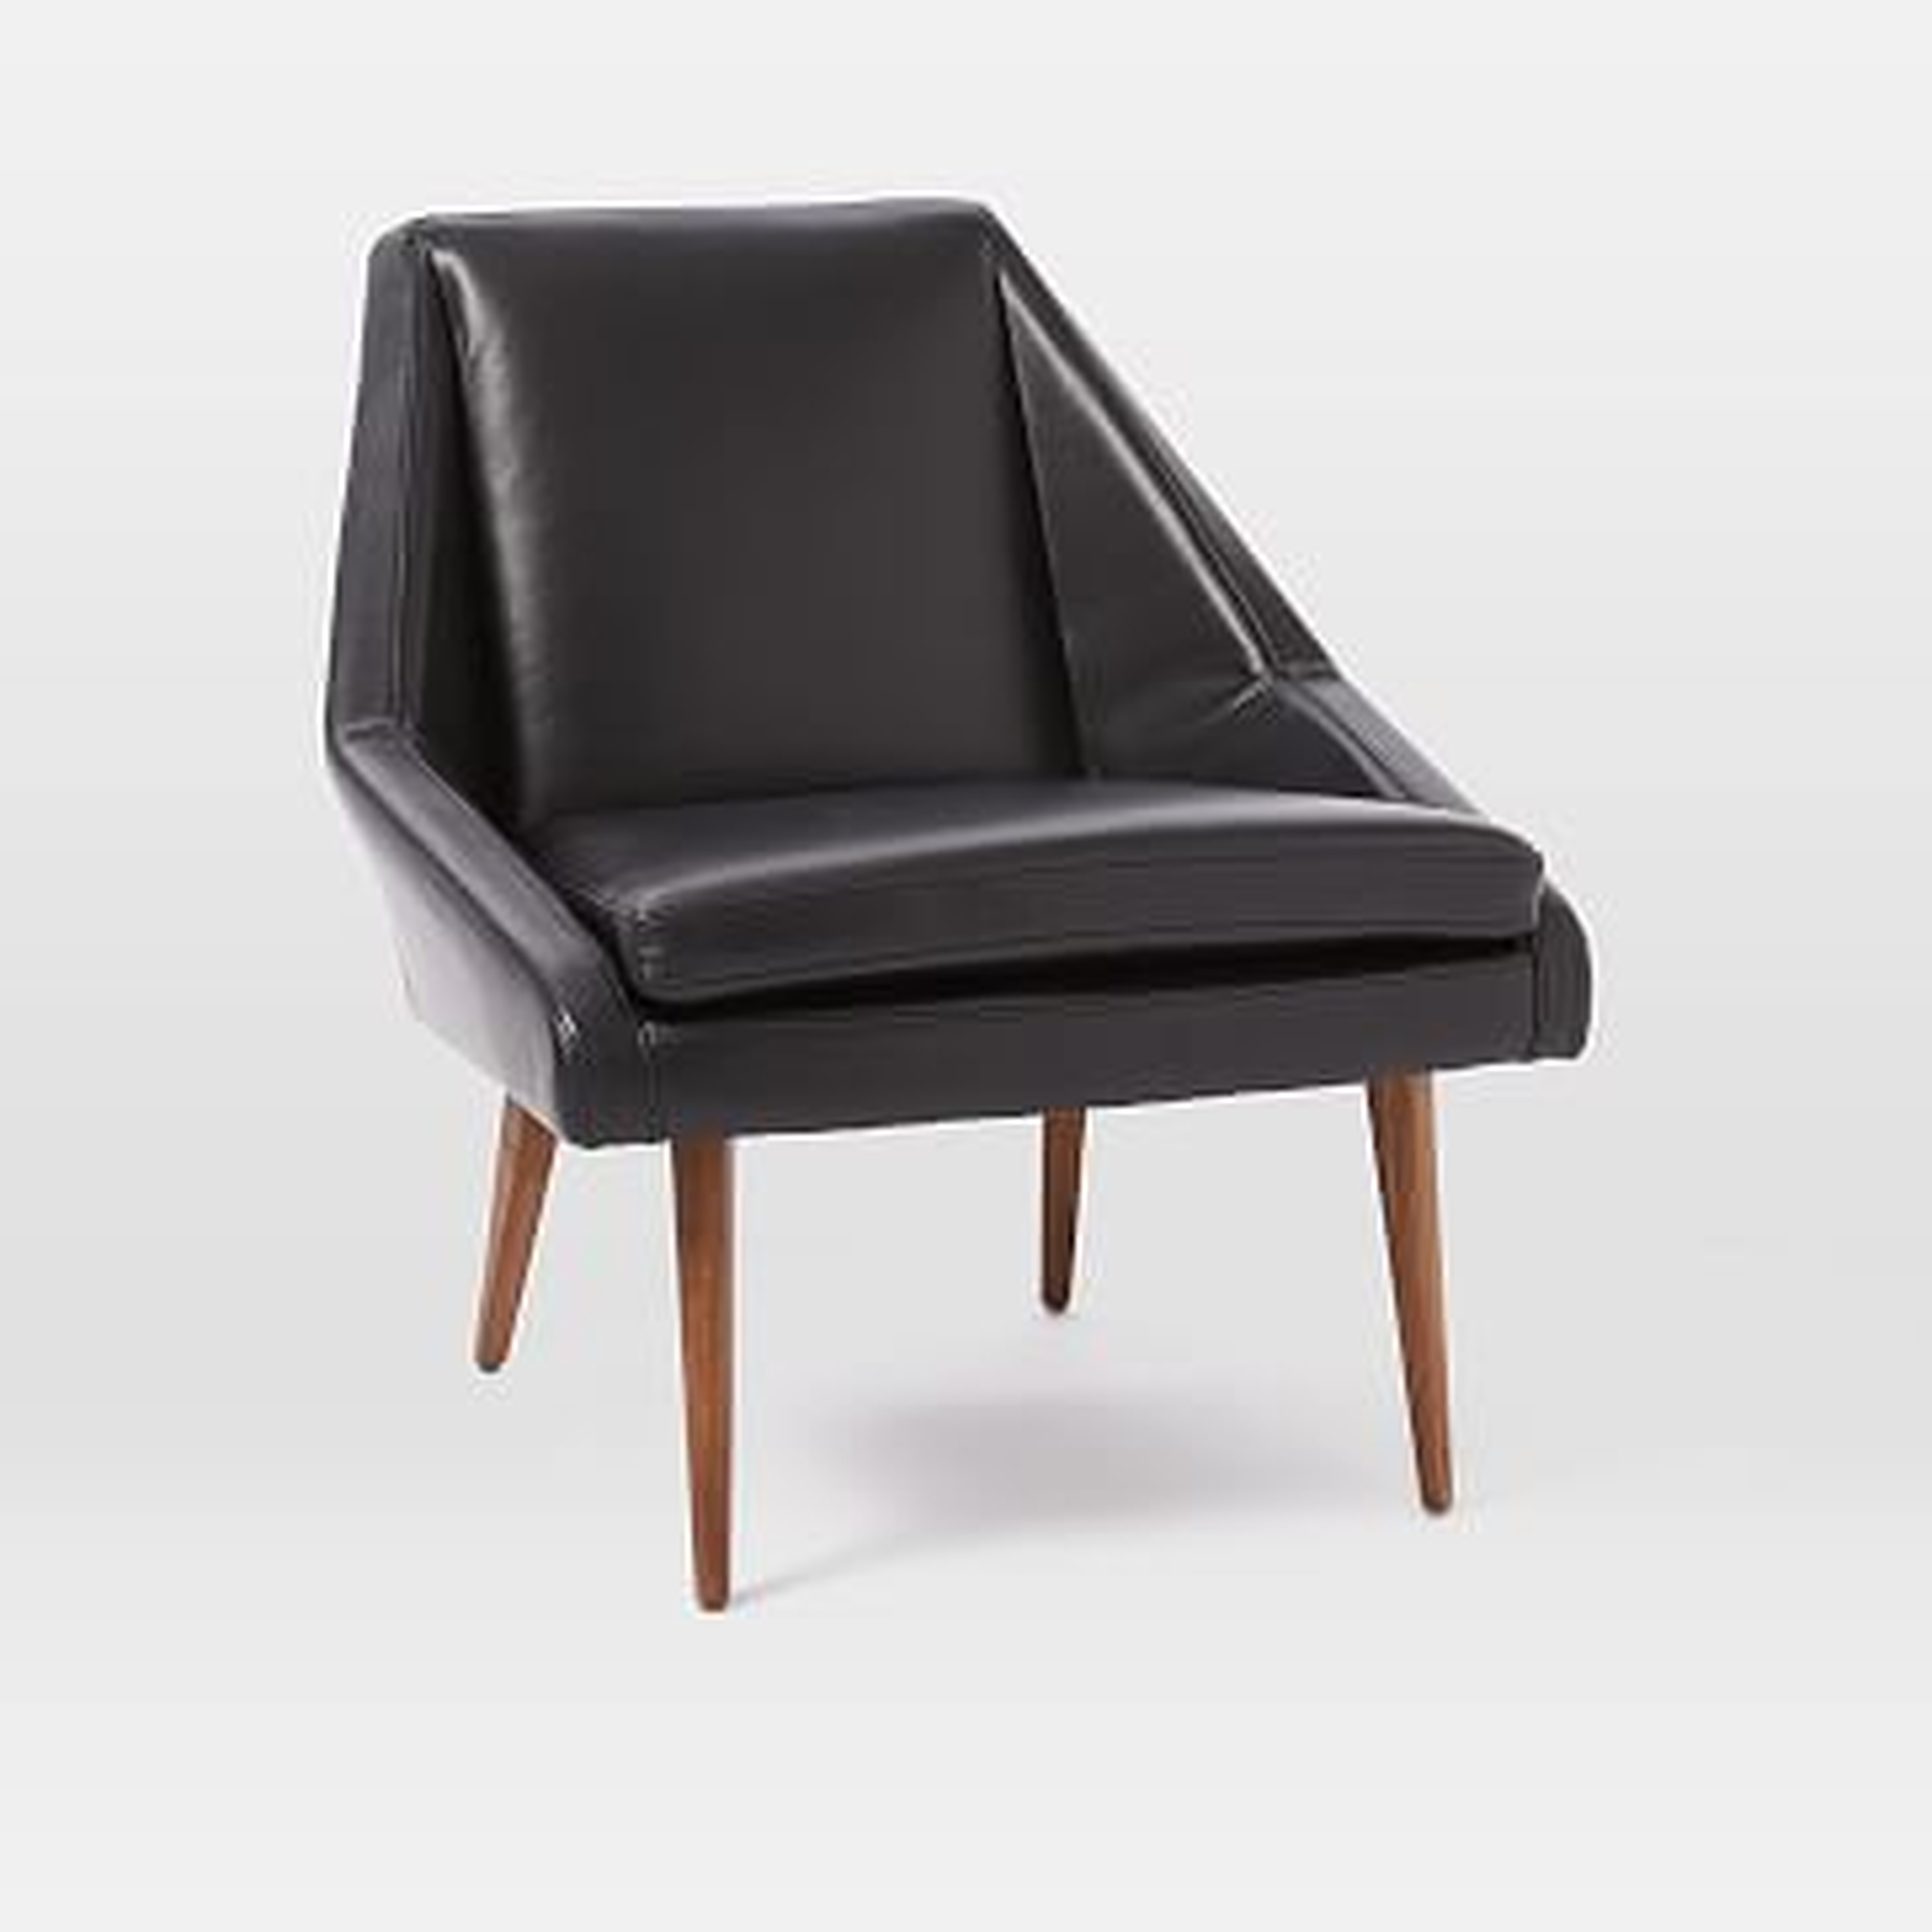 Parker Leather Slipper Chair, Black - West Elm